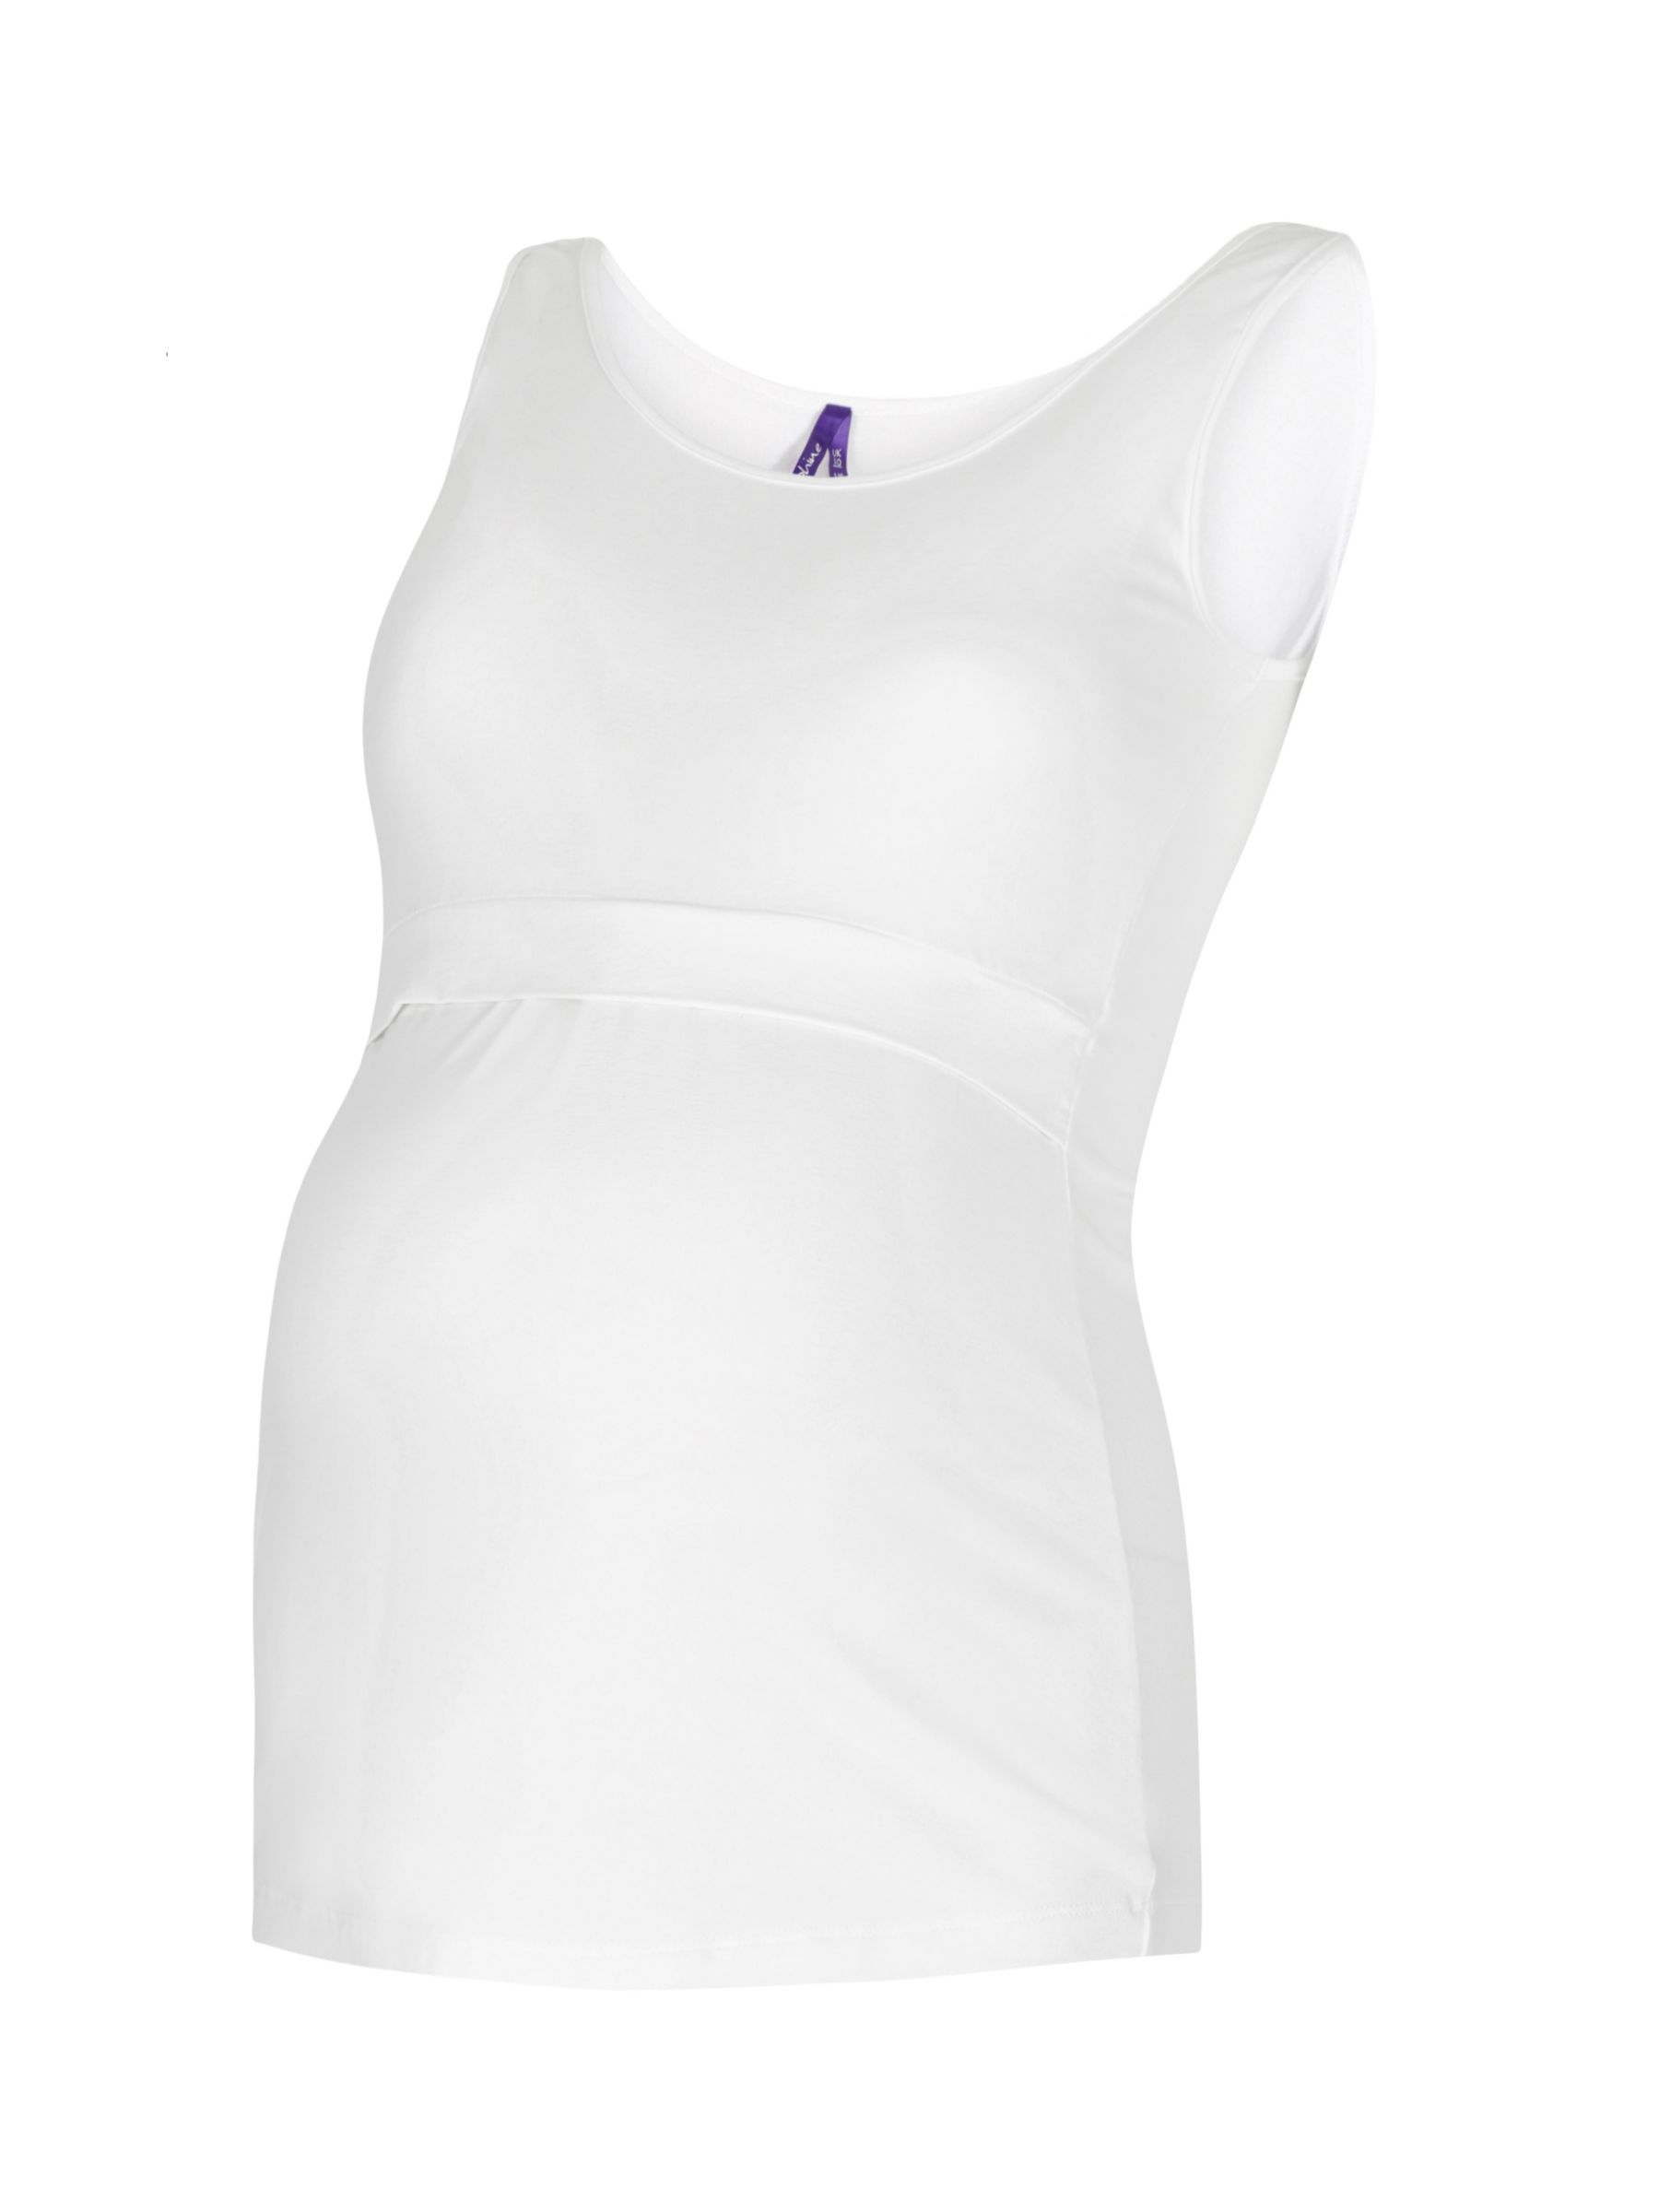 Seraphine Women's Maternity & Nursing Layered Vest White at